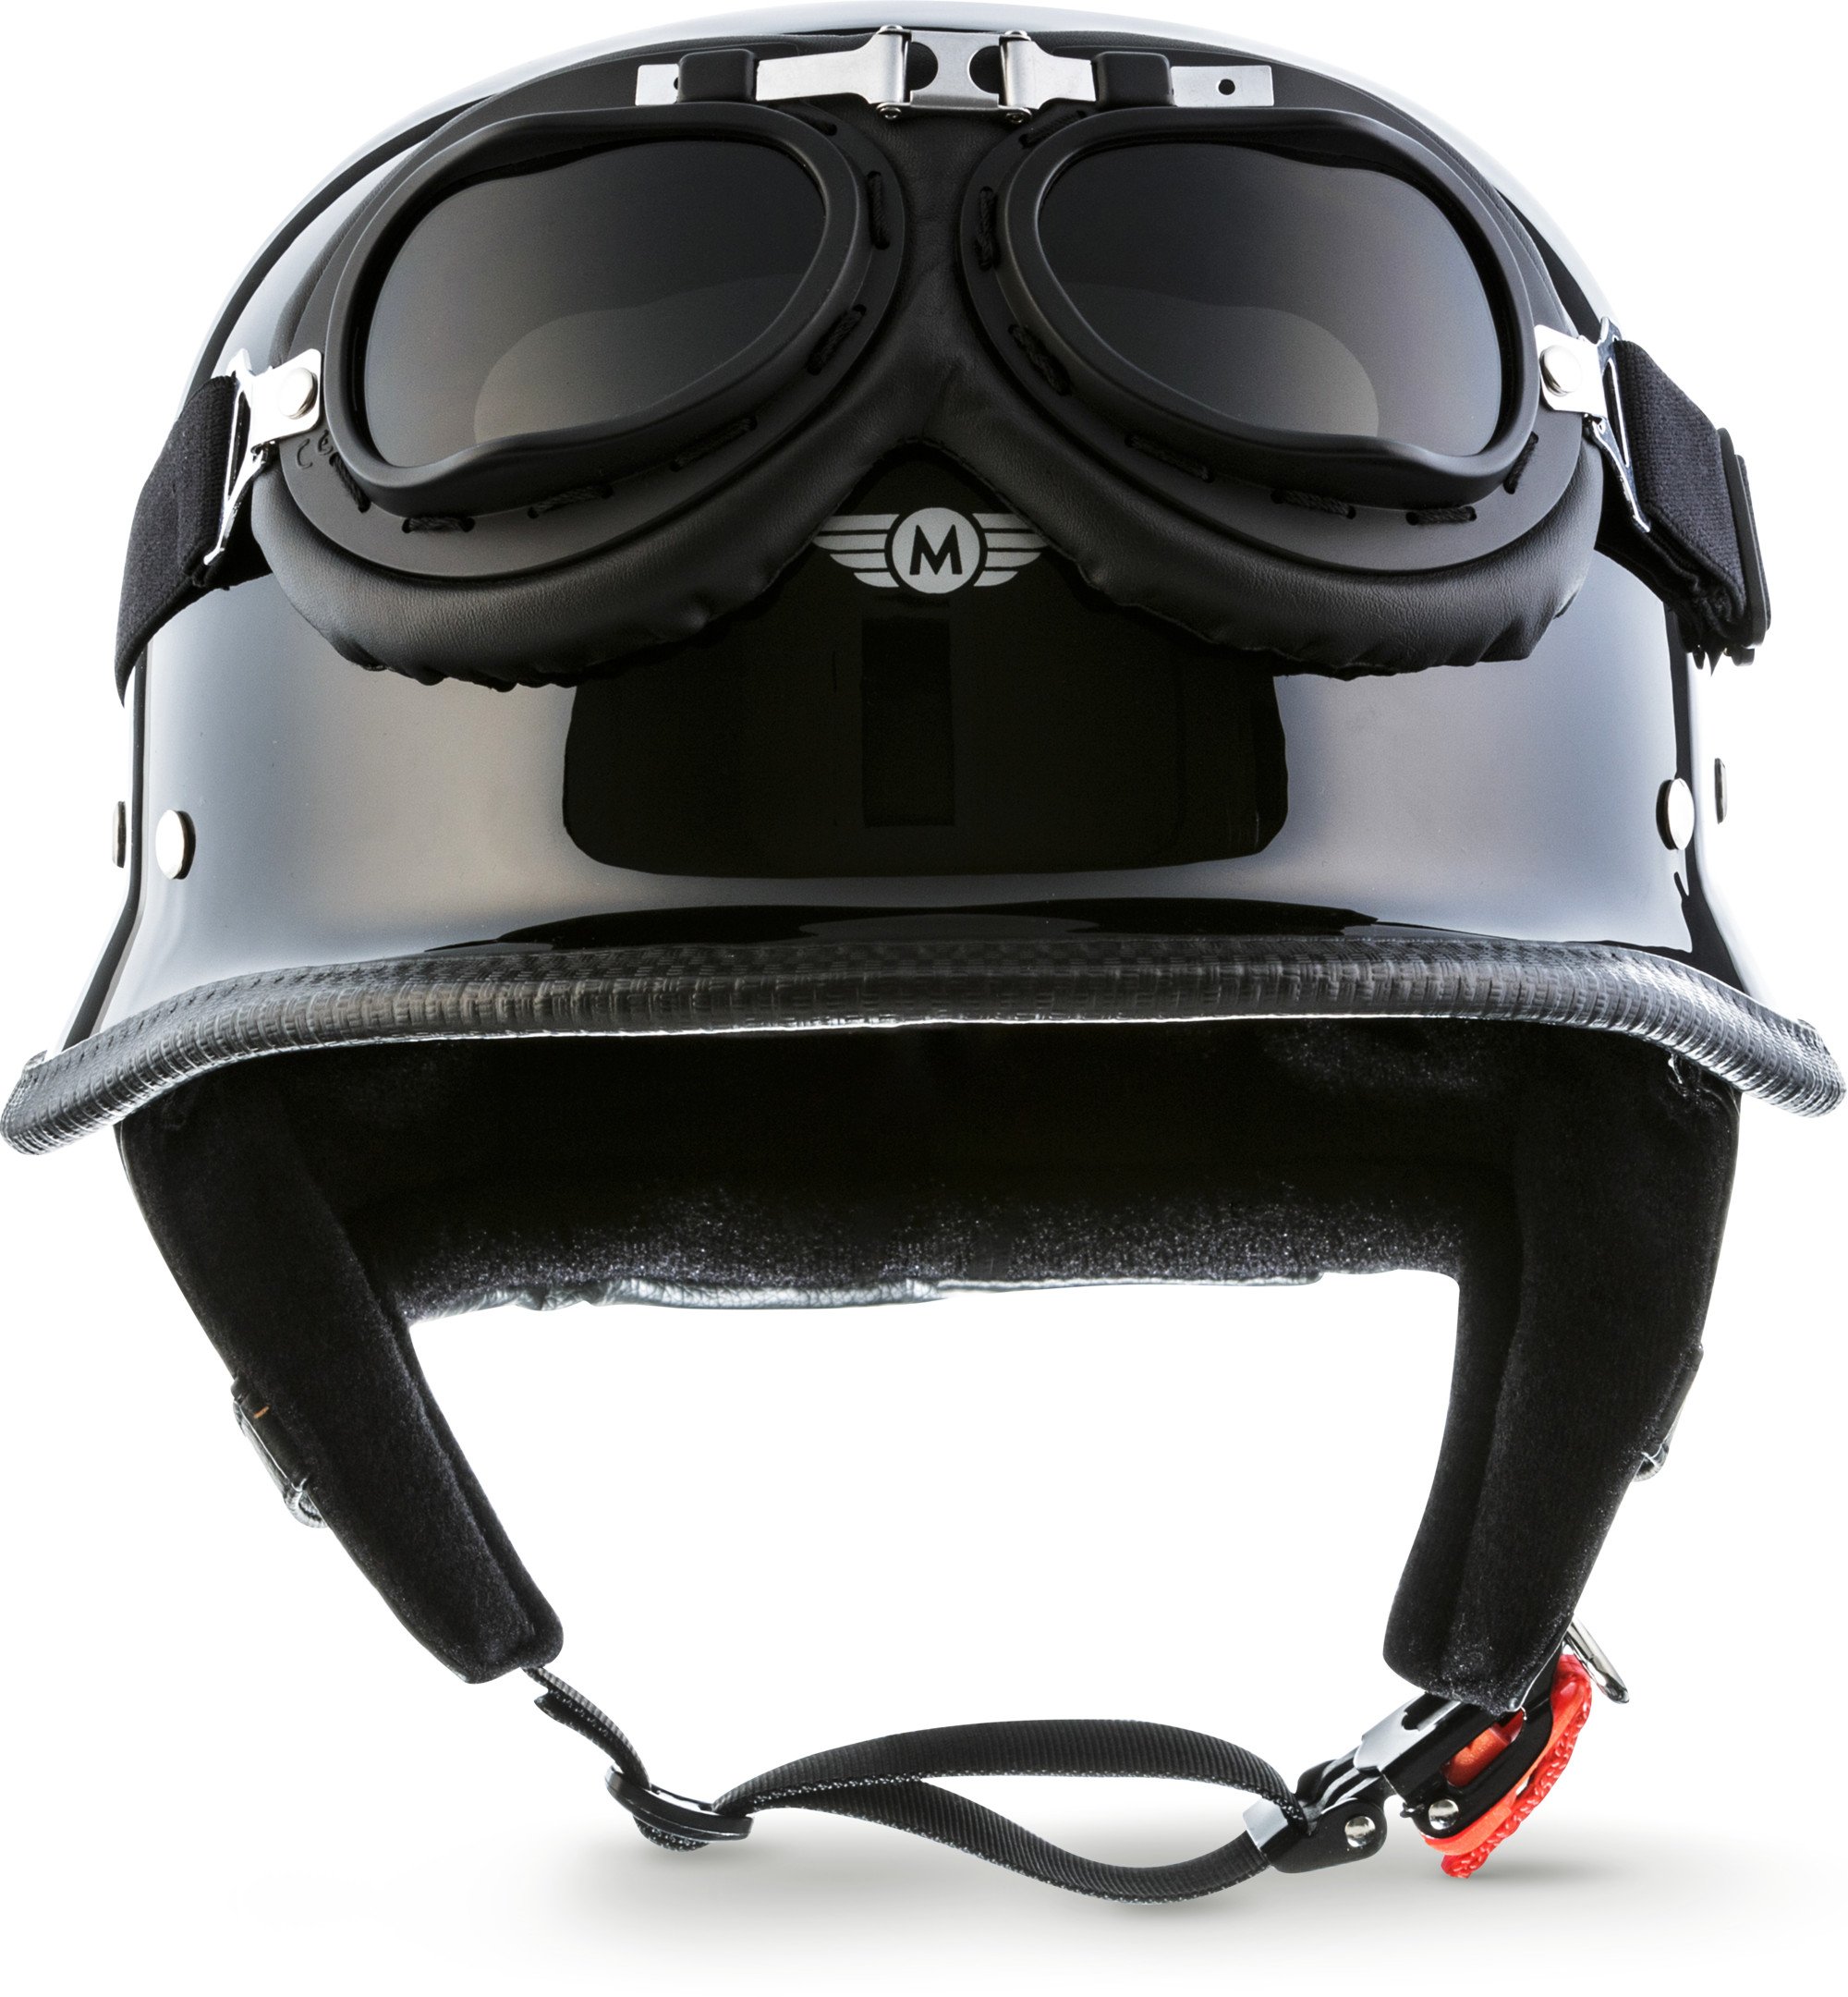 Moto Helmets® D33-Set „Black“ · Brain-Cap · Halbschale Jet-Helm Motorrad-Helm Roller-Helm Scooter-Helm Bobber Mofa-Helm Chopper Retro Cruiser Vintage Pilot Biker Helmet Brille Visier · S (55-56cm)